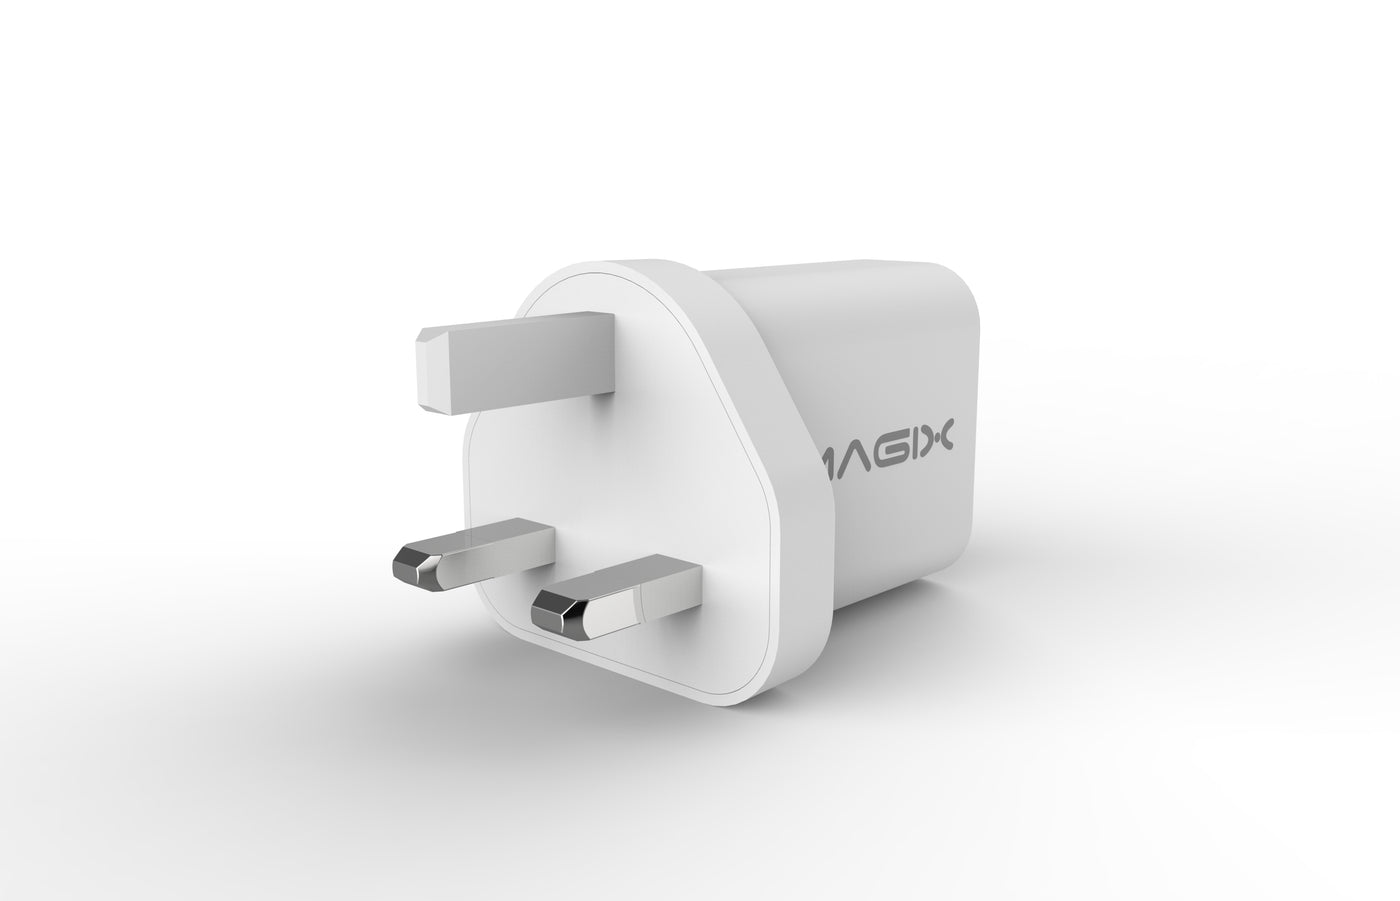 MAGIX 17W Wall Charger, Double USB Port 1A+2.4A - UK Plug